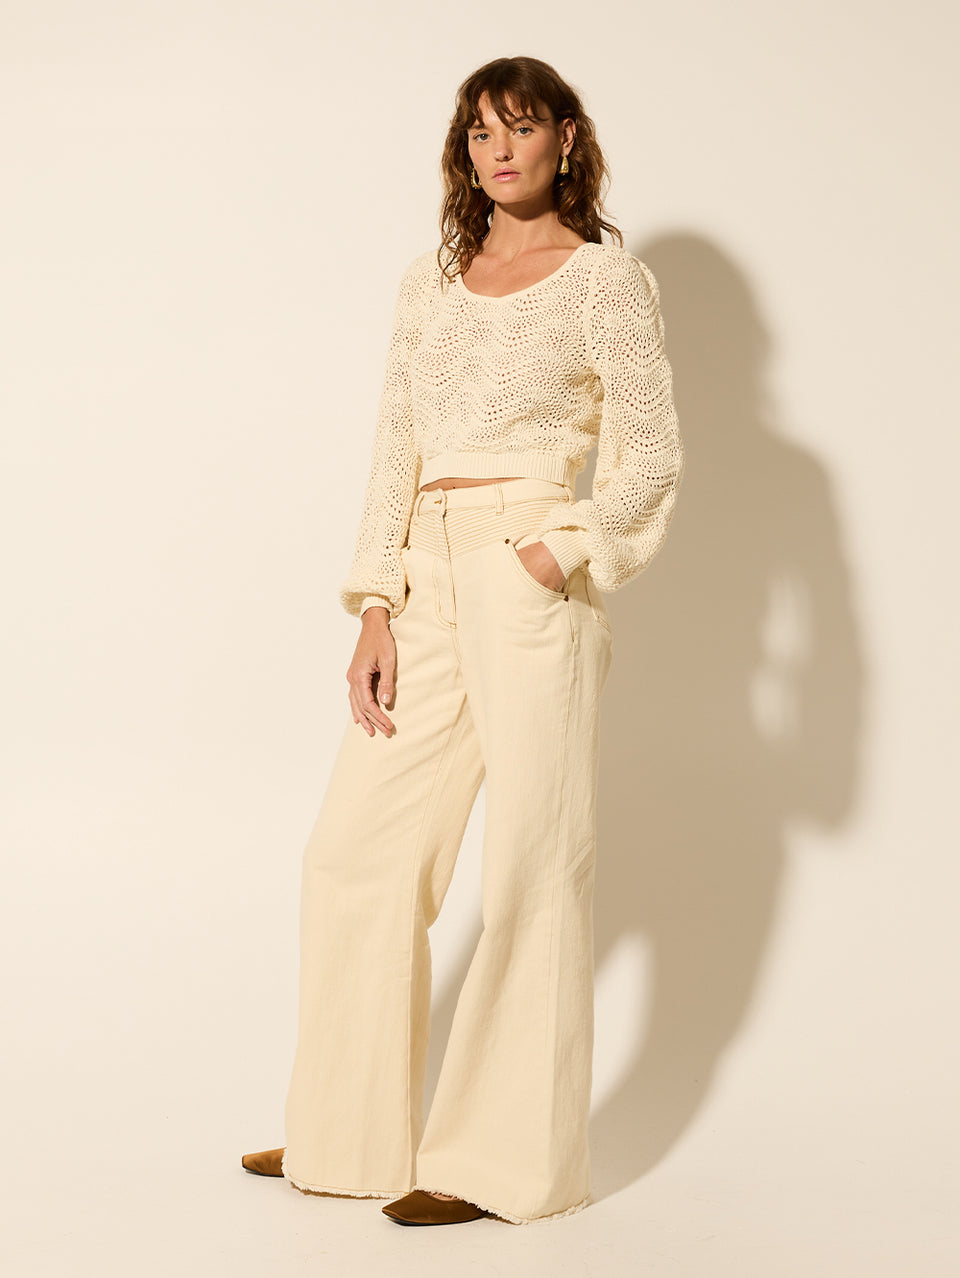 Mariana Knit Top KIVARI | Model wears cream knit top side view